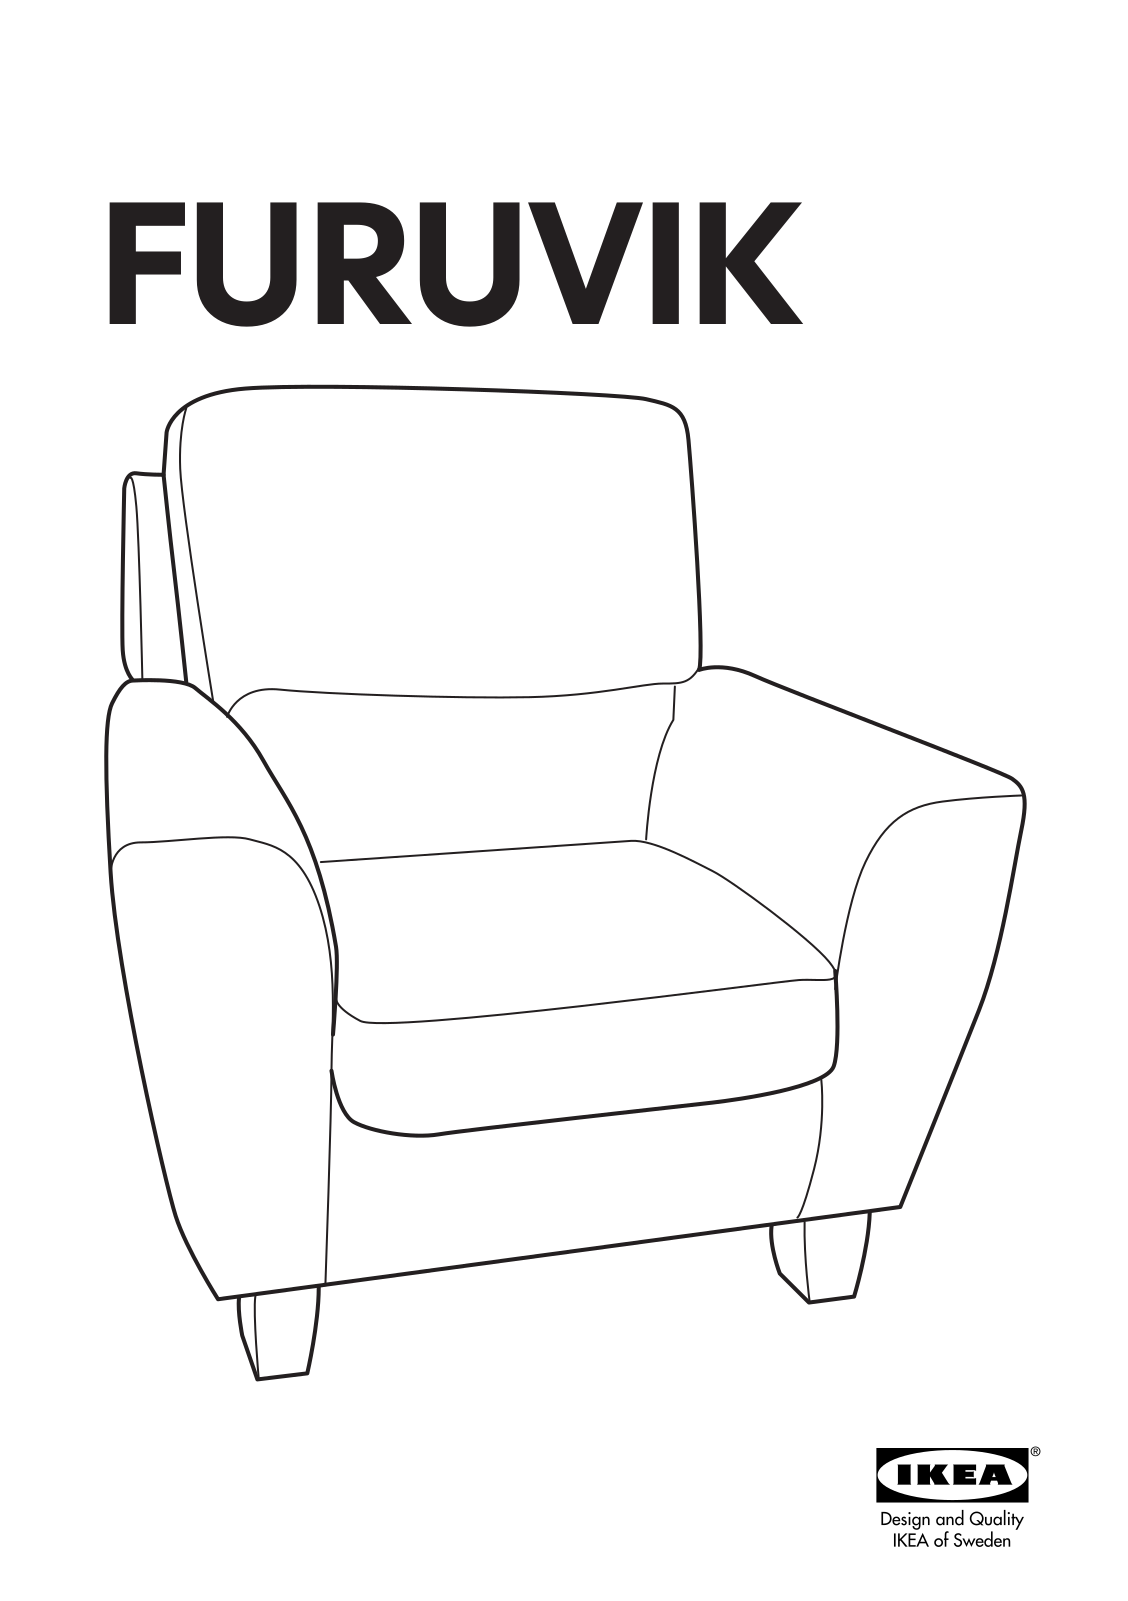 IKEA FURUVIK RECLINER Assembly Instruction